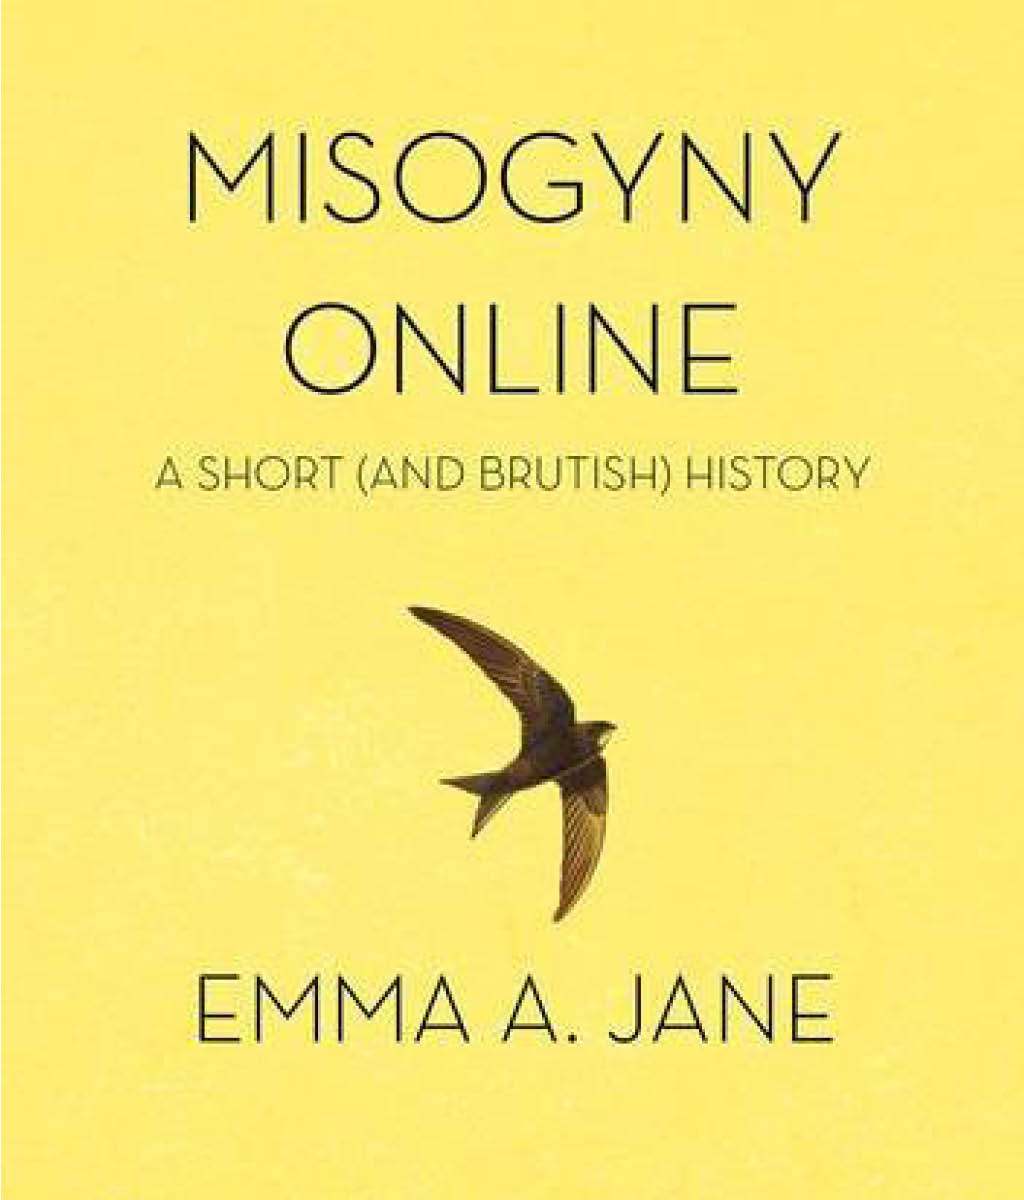 Misogyny Online : A Short (and Brutish) History by Emma A. Jane